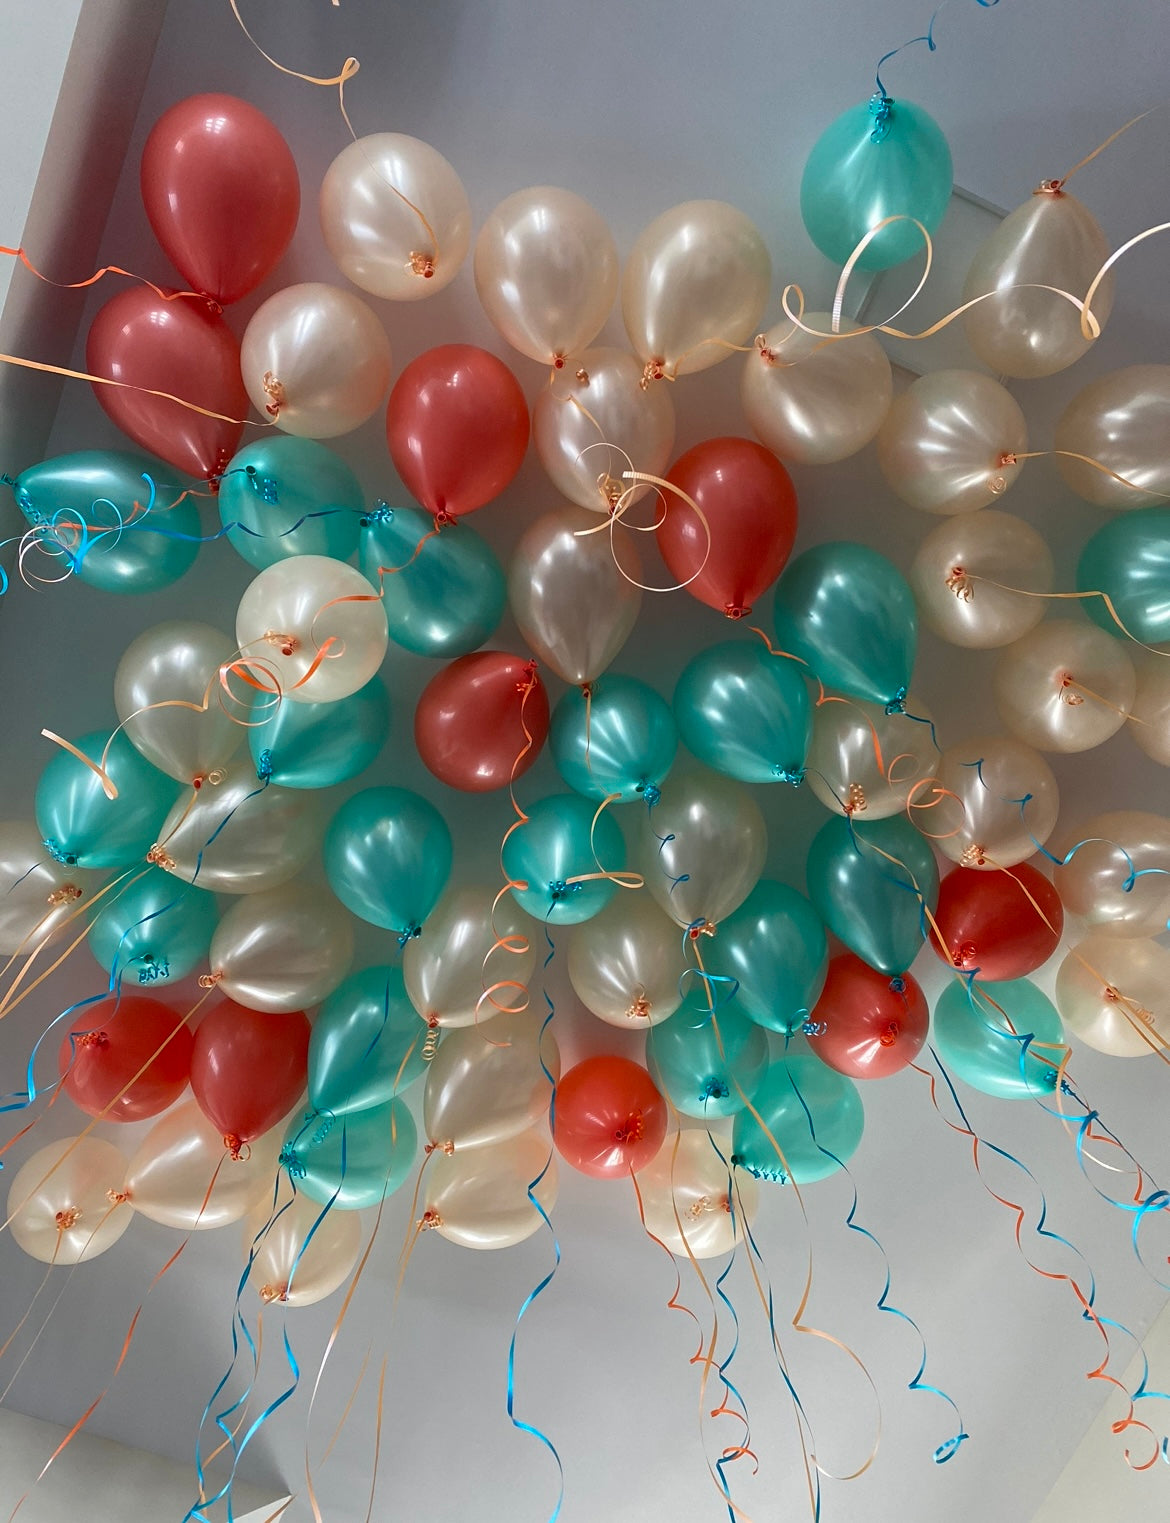 11” Loose Balloons